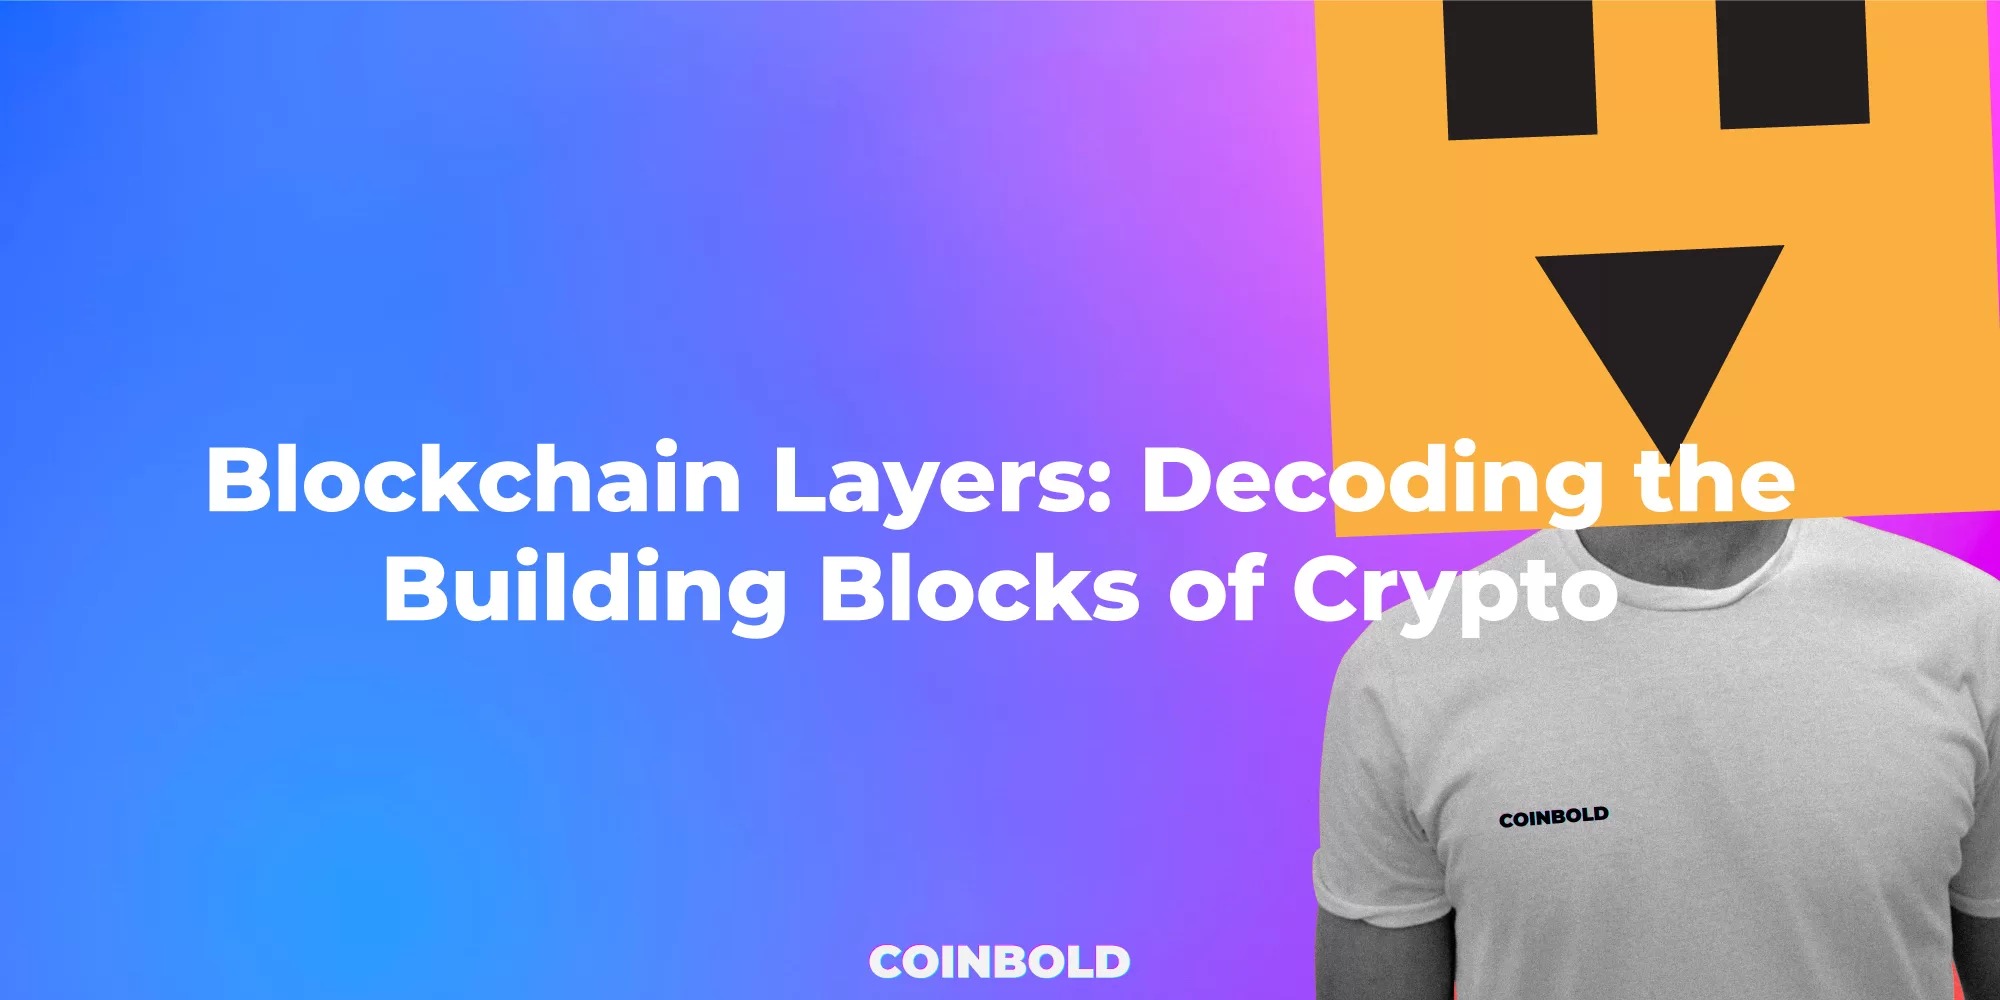 Blockchain Layers: Decoding the Building Blocks of Crypto